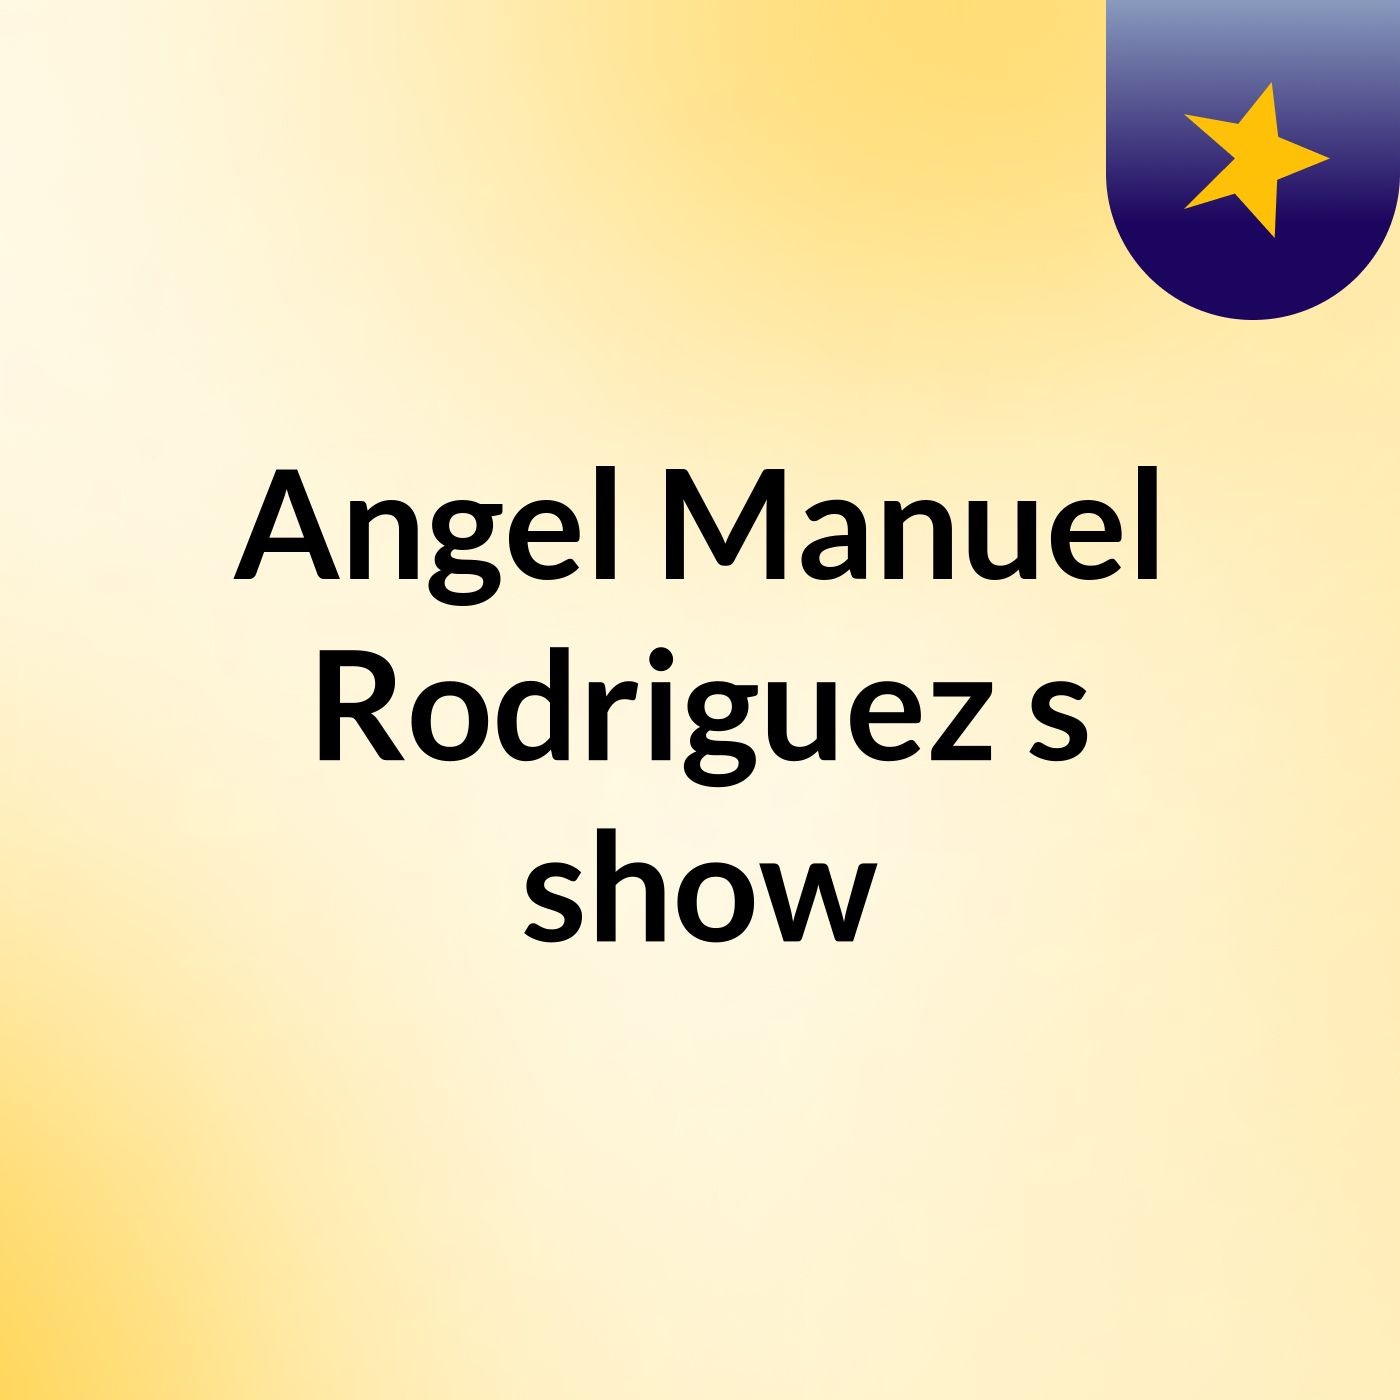 Angel Manuel Rodriguez's show